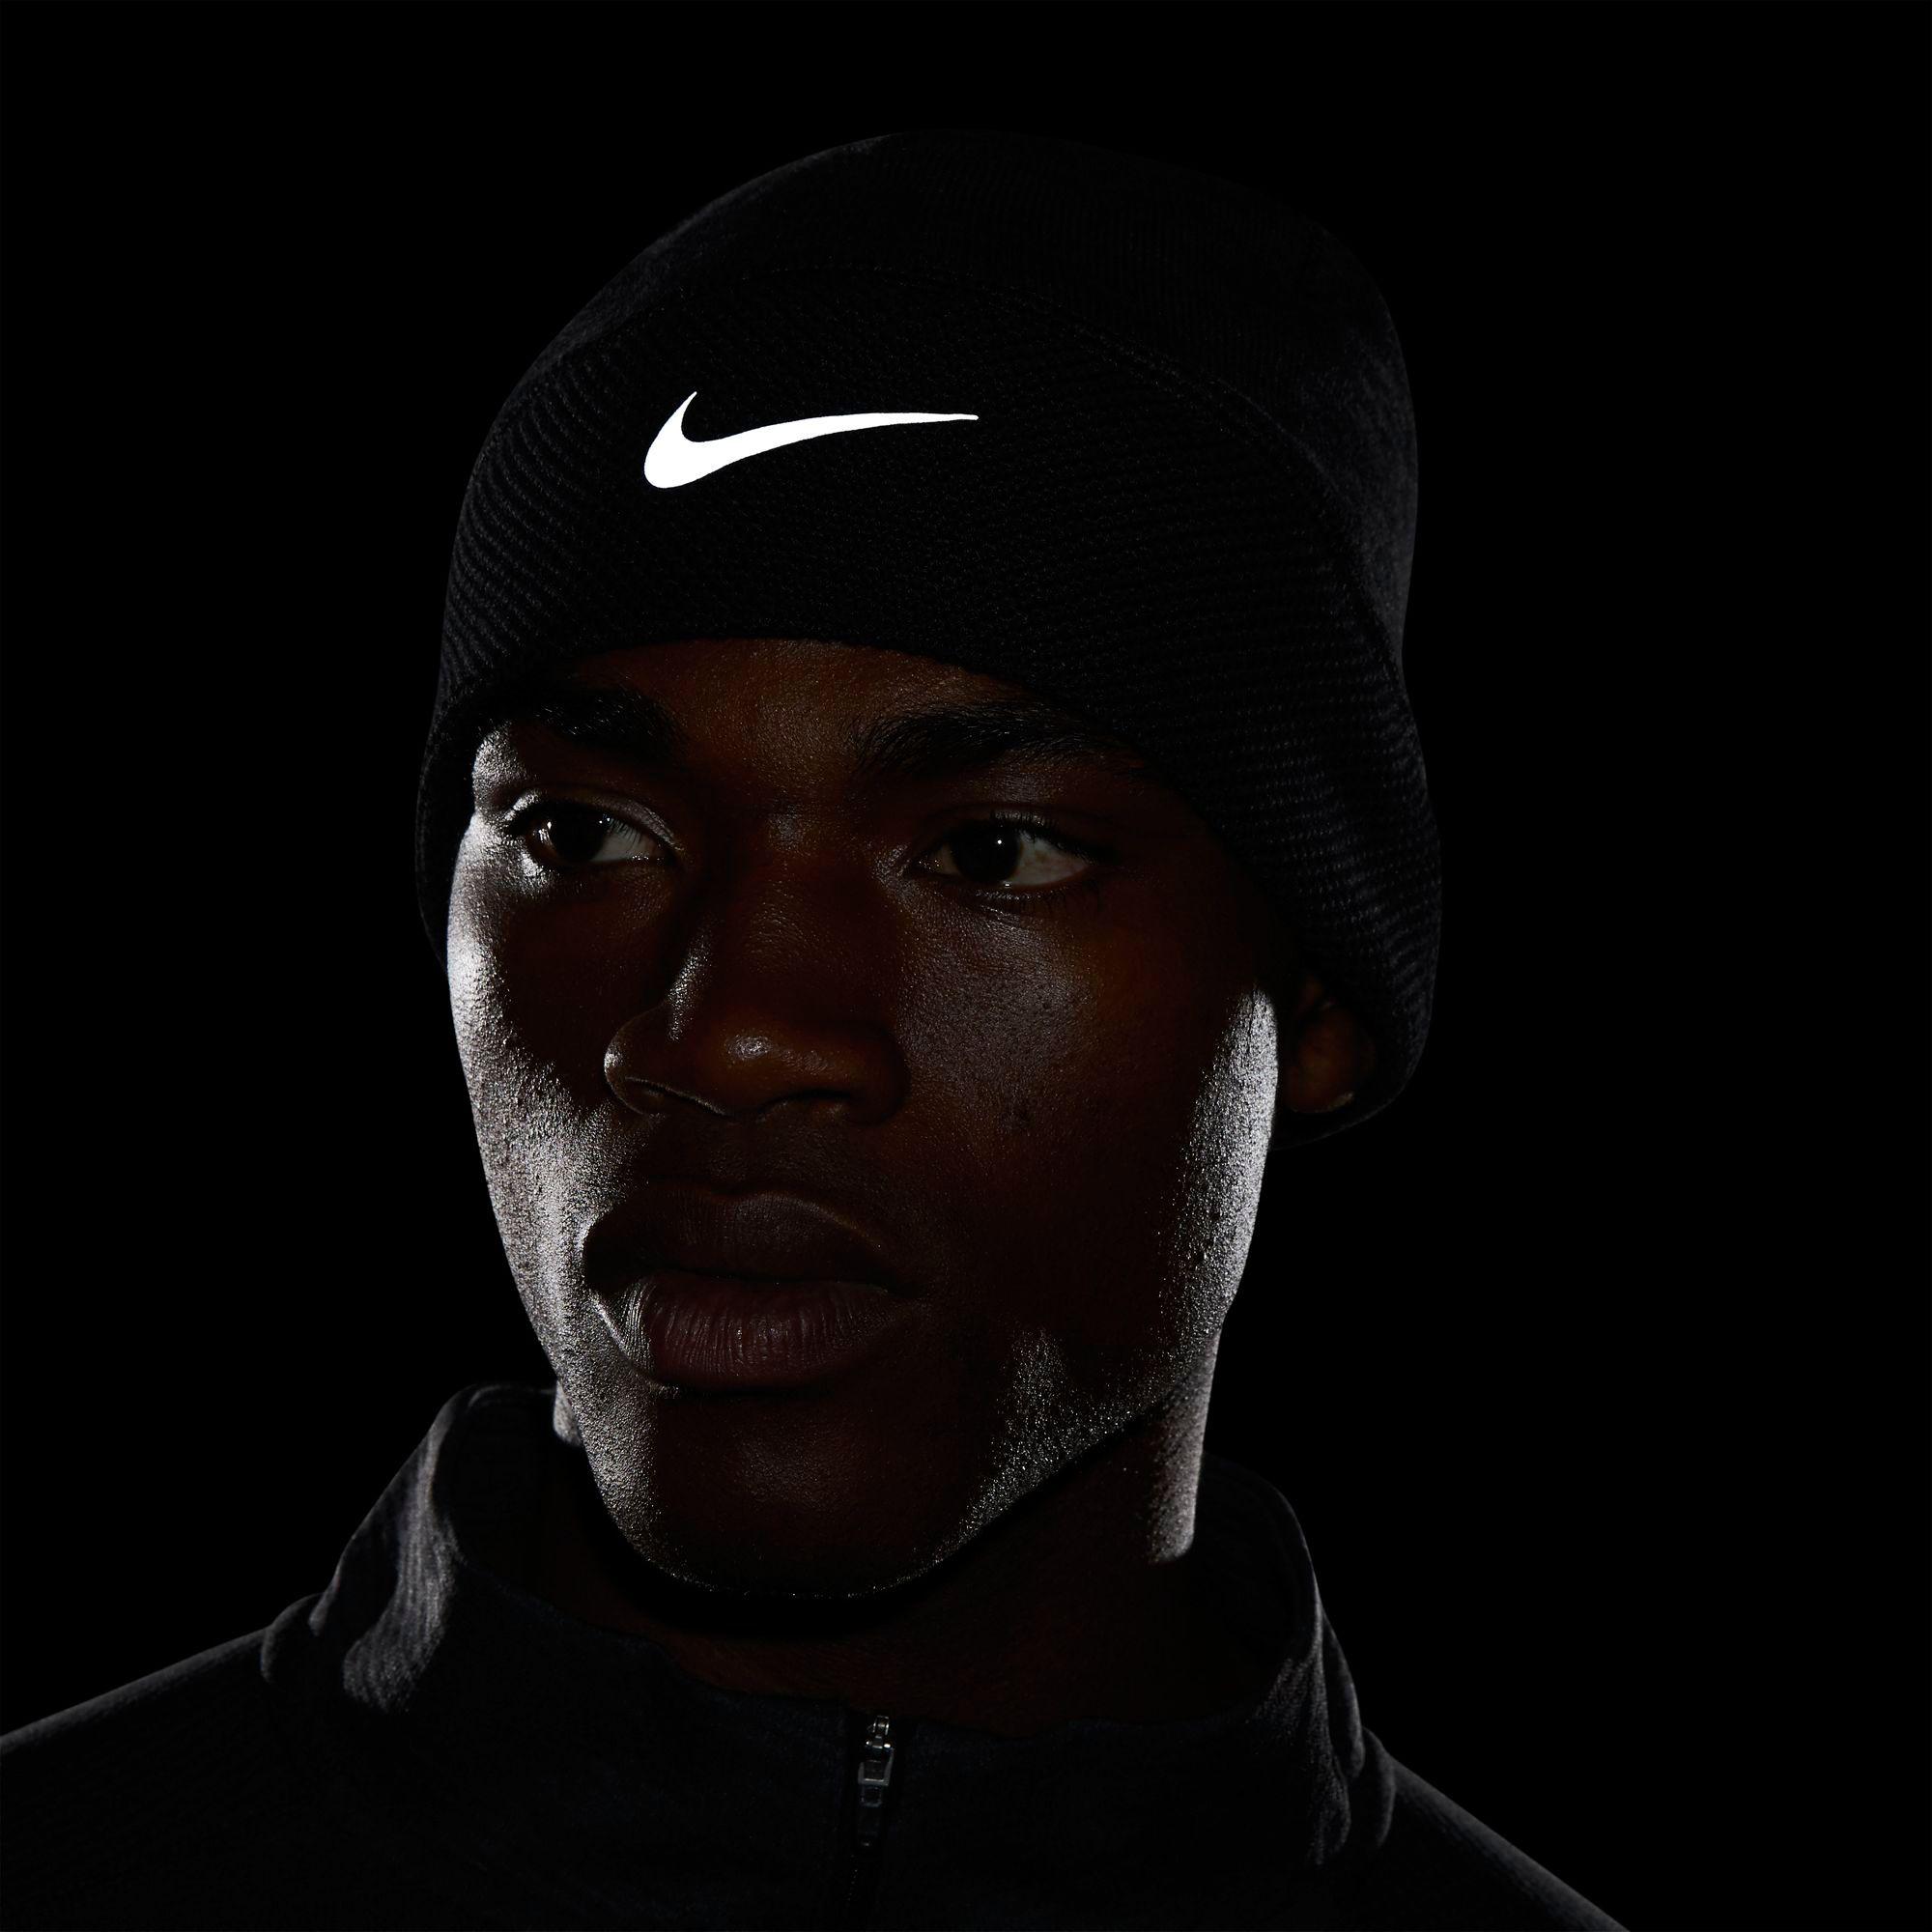 Nike Dri-fit Running Beanie in Black for Men - Lyst